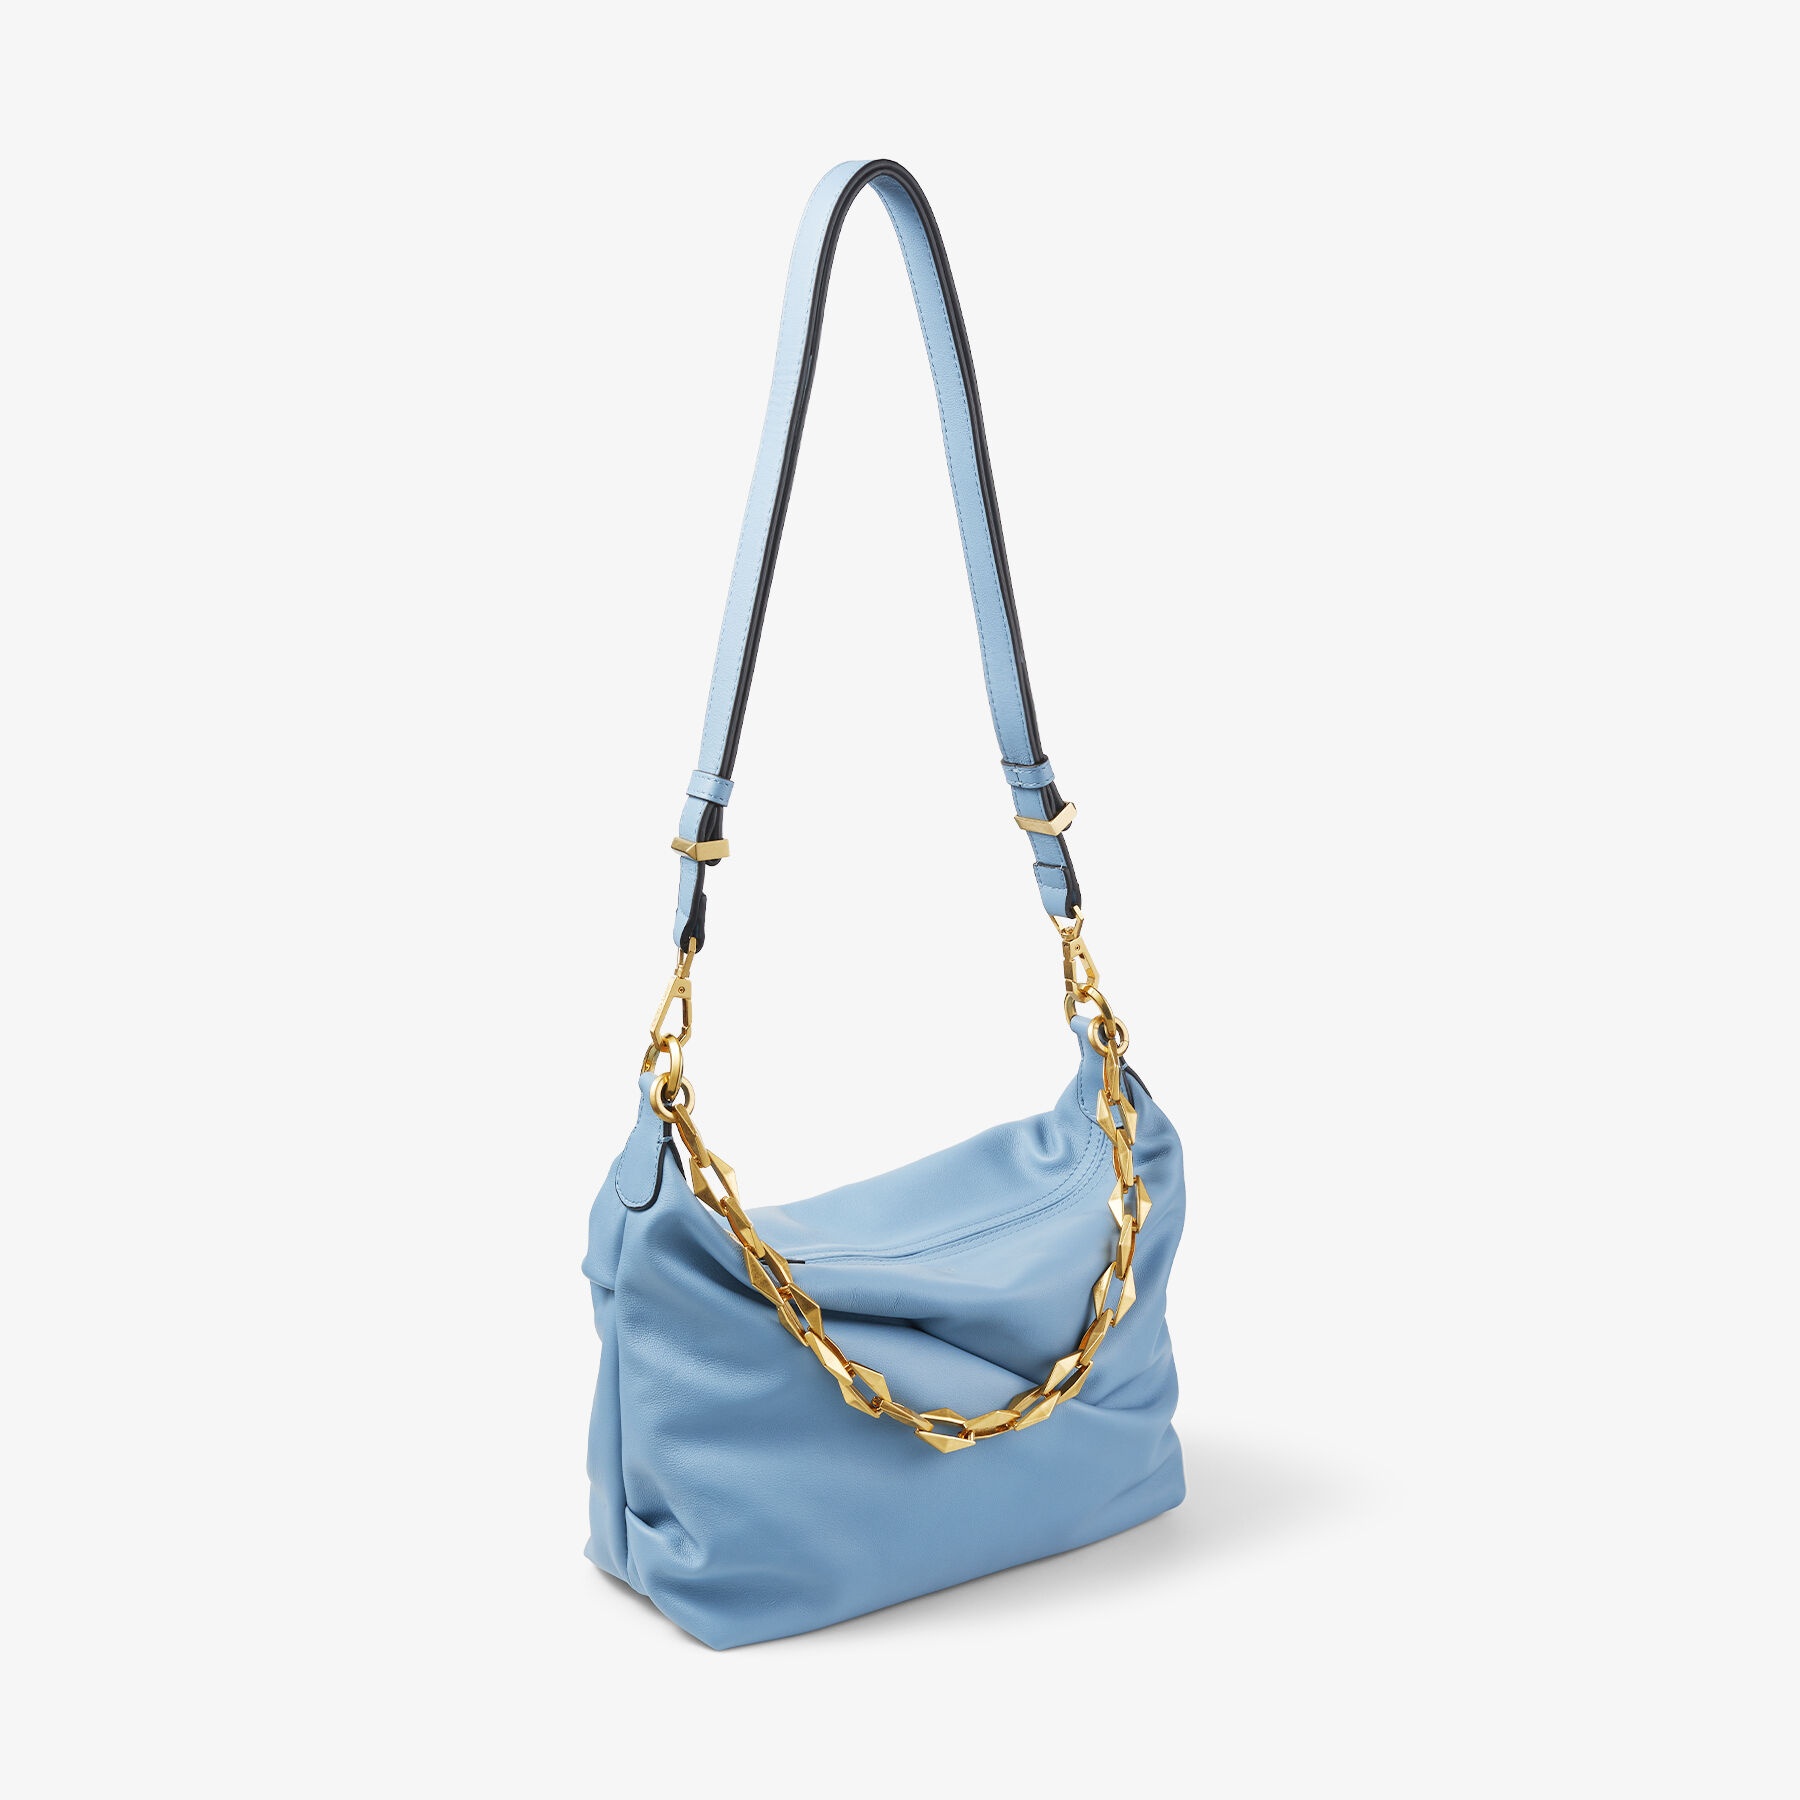 Diamond Soft Hobo S
Smoky Blue Soft Calf Leather Hobo Bag with Chain Strap - 9